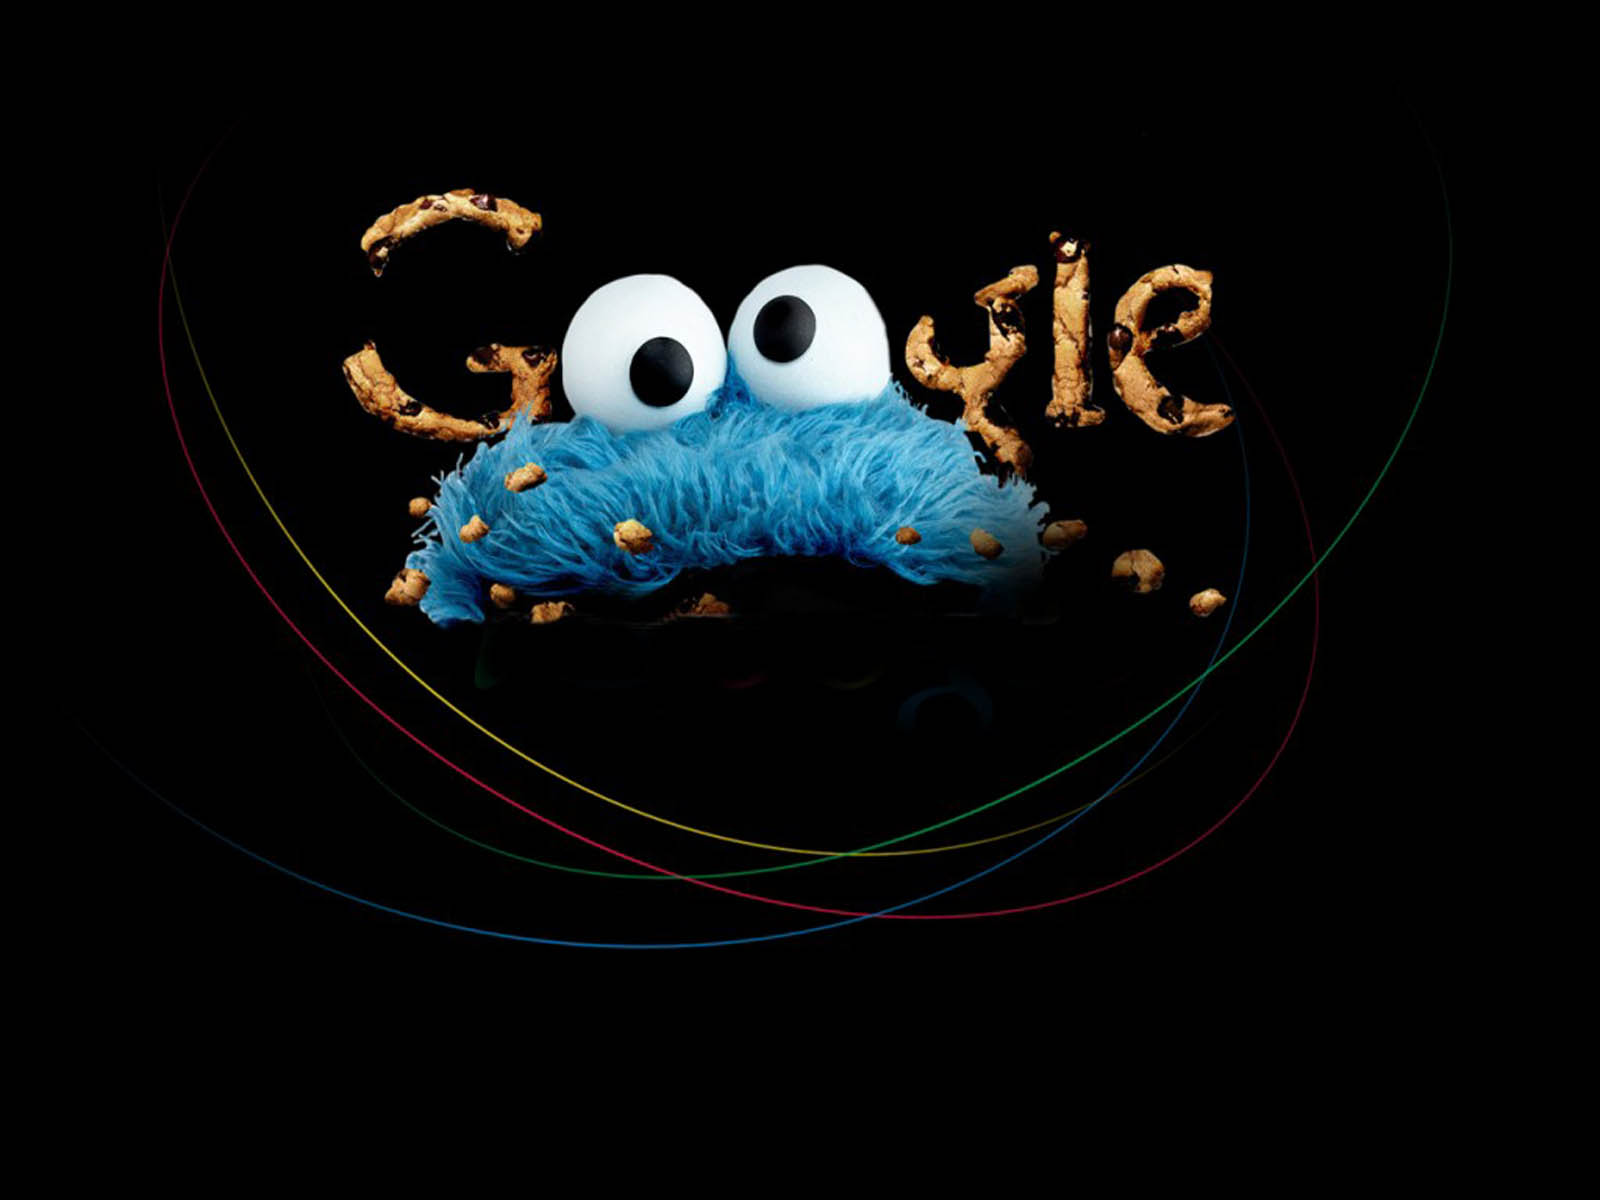 Google | Google pixel wallpaper, Google logo, Logo wallpaper hd-mncb.edu.vn